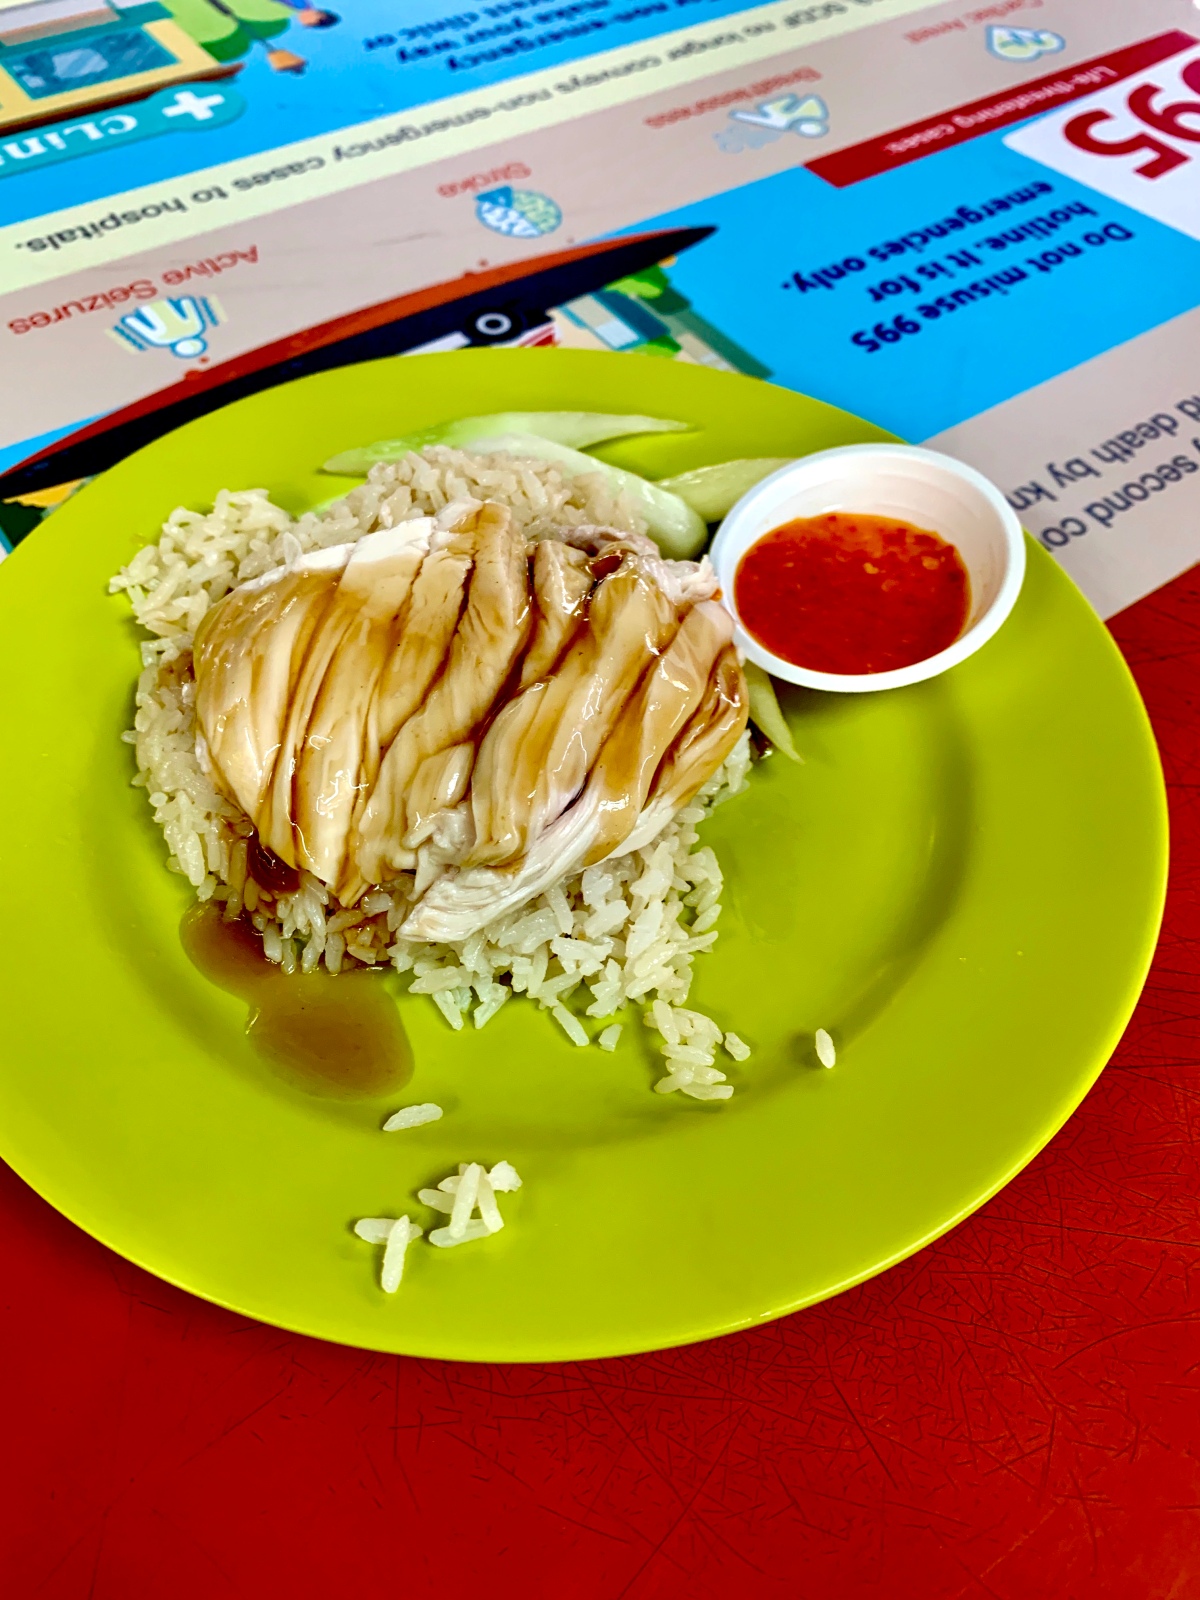 Hainanese Chicken Rice $3.50 SGD ($2.60 USD)